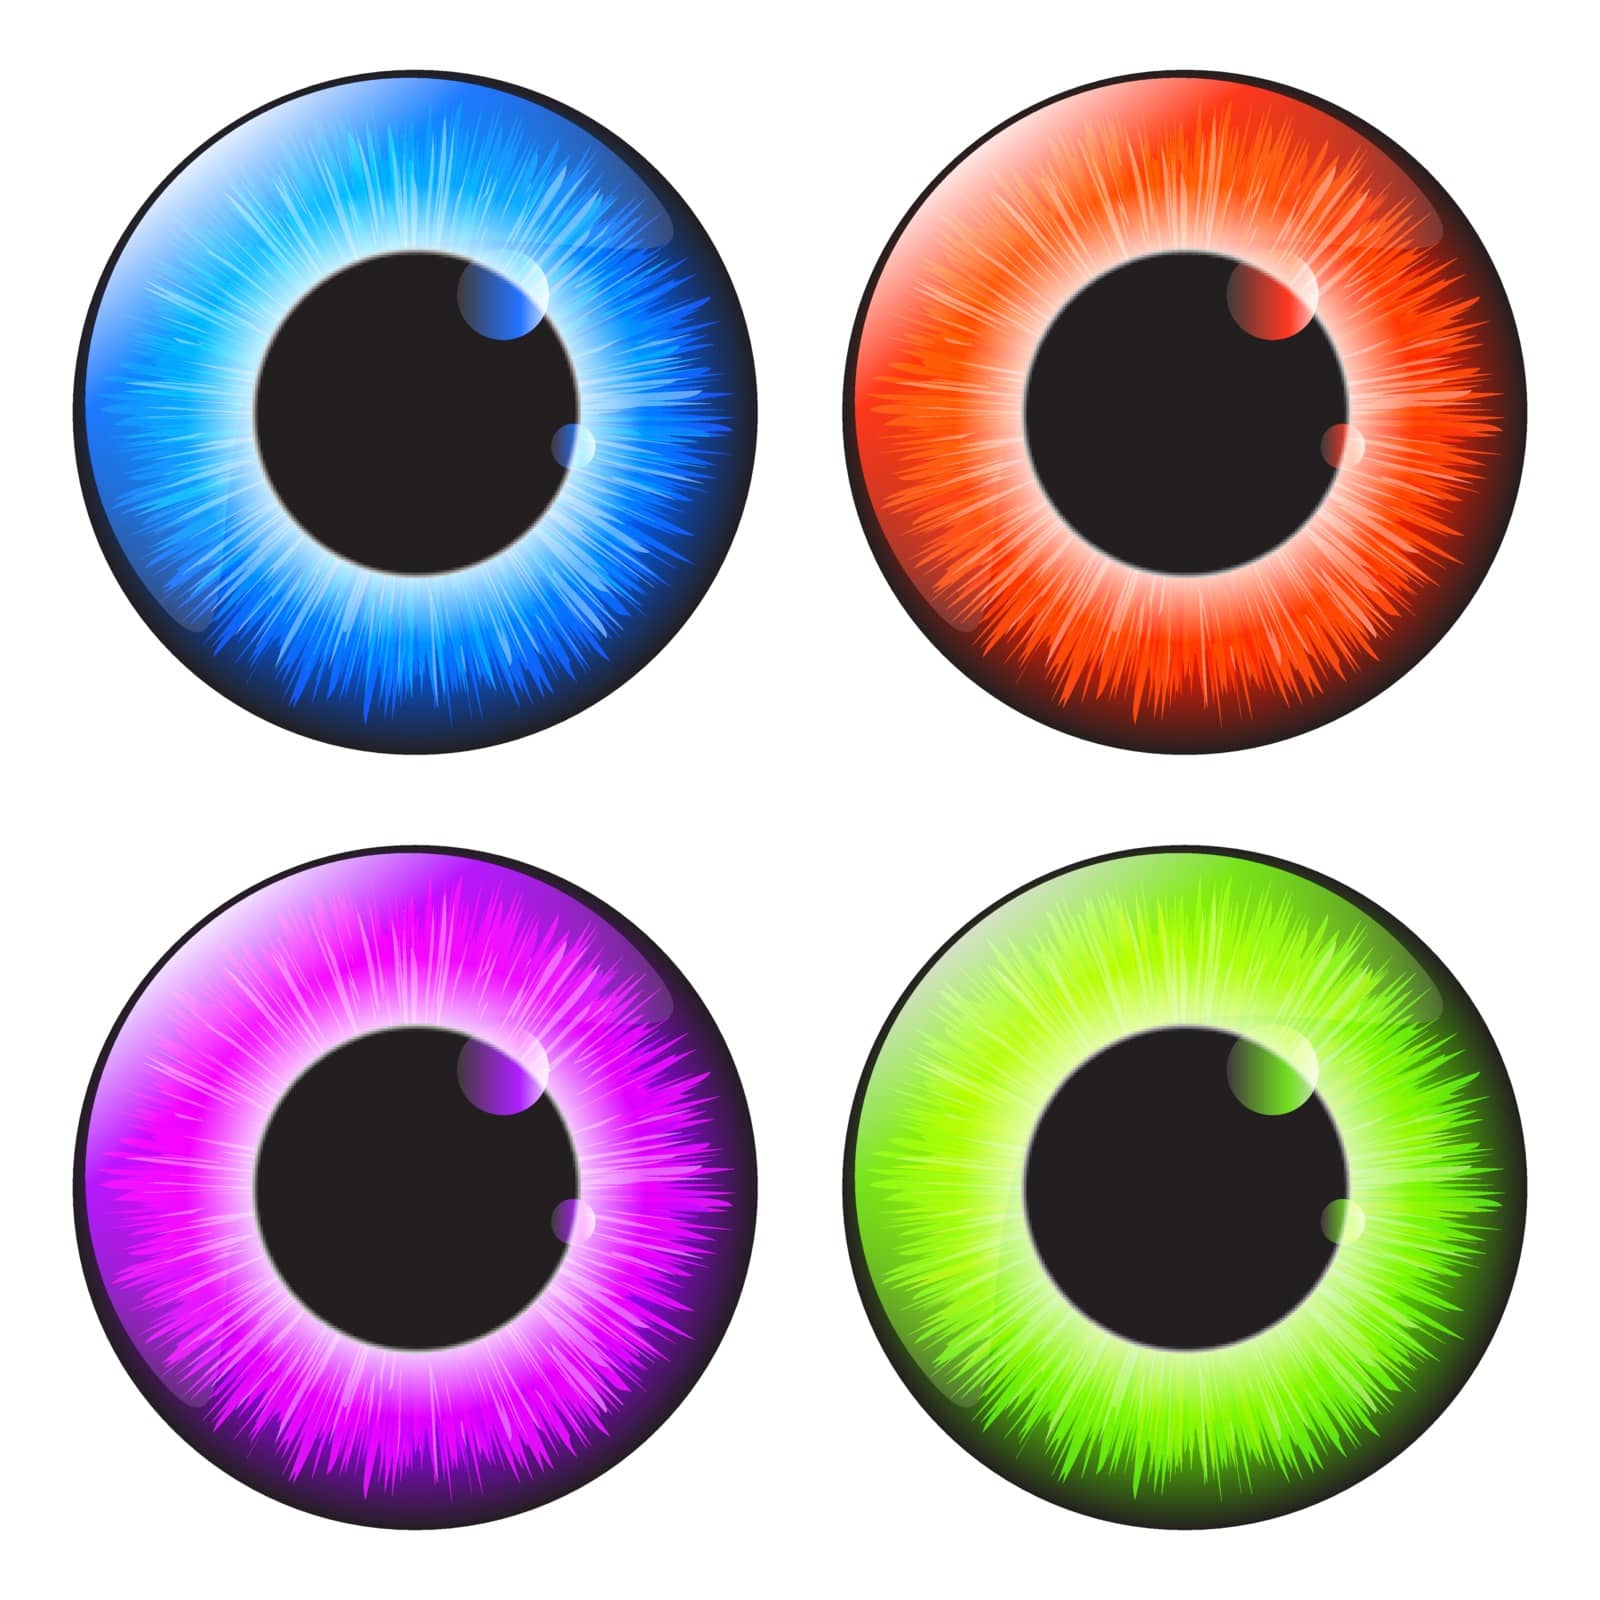  iris eye realistic  vector set design isolated on white background